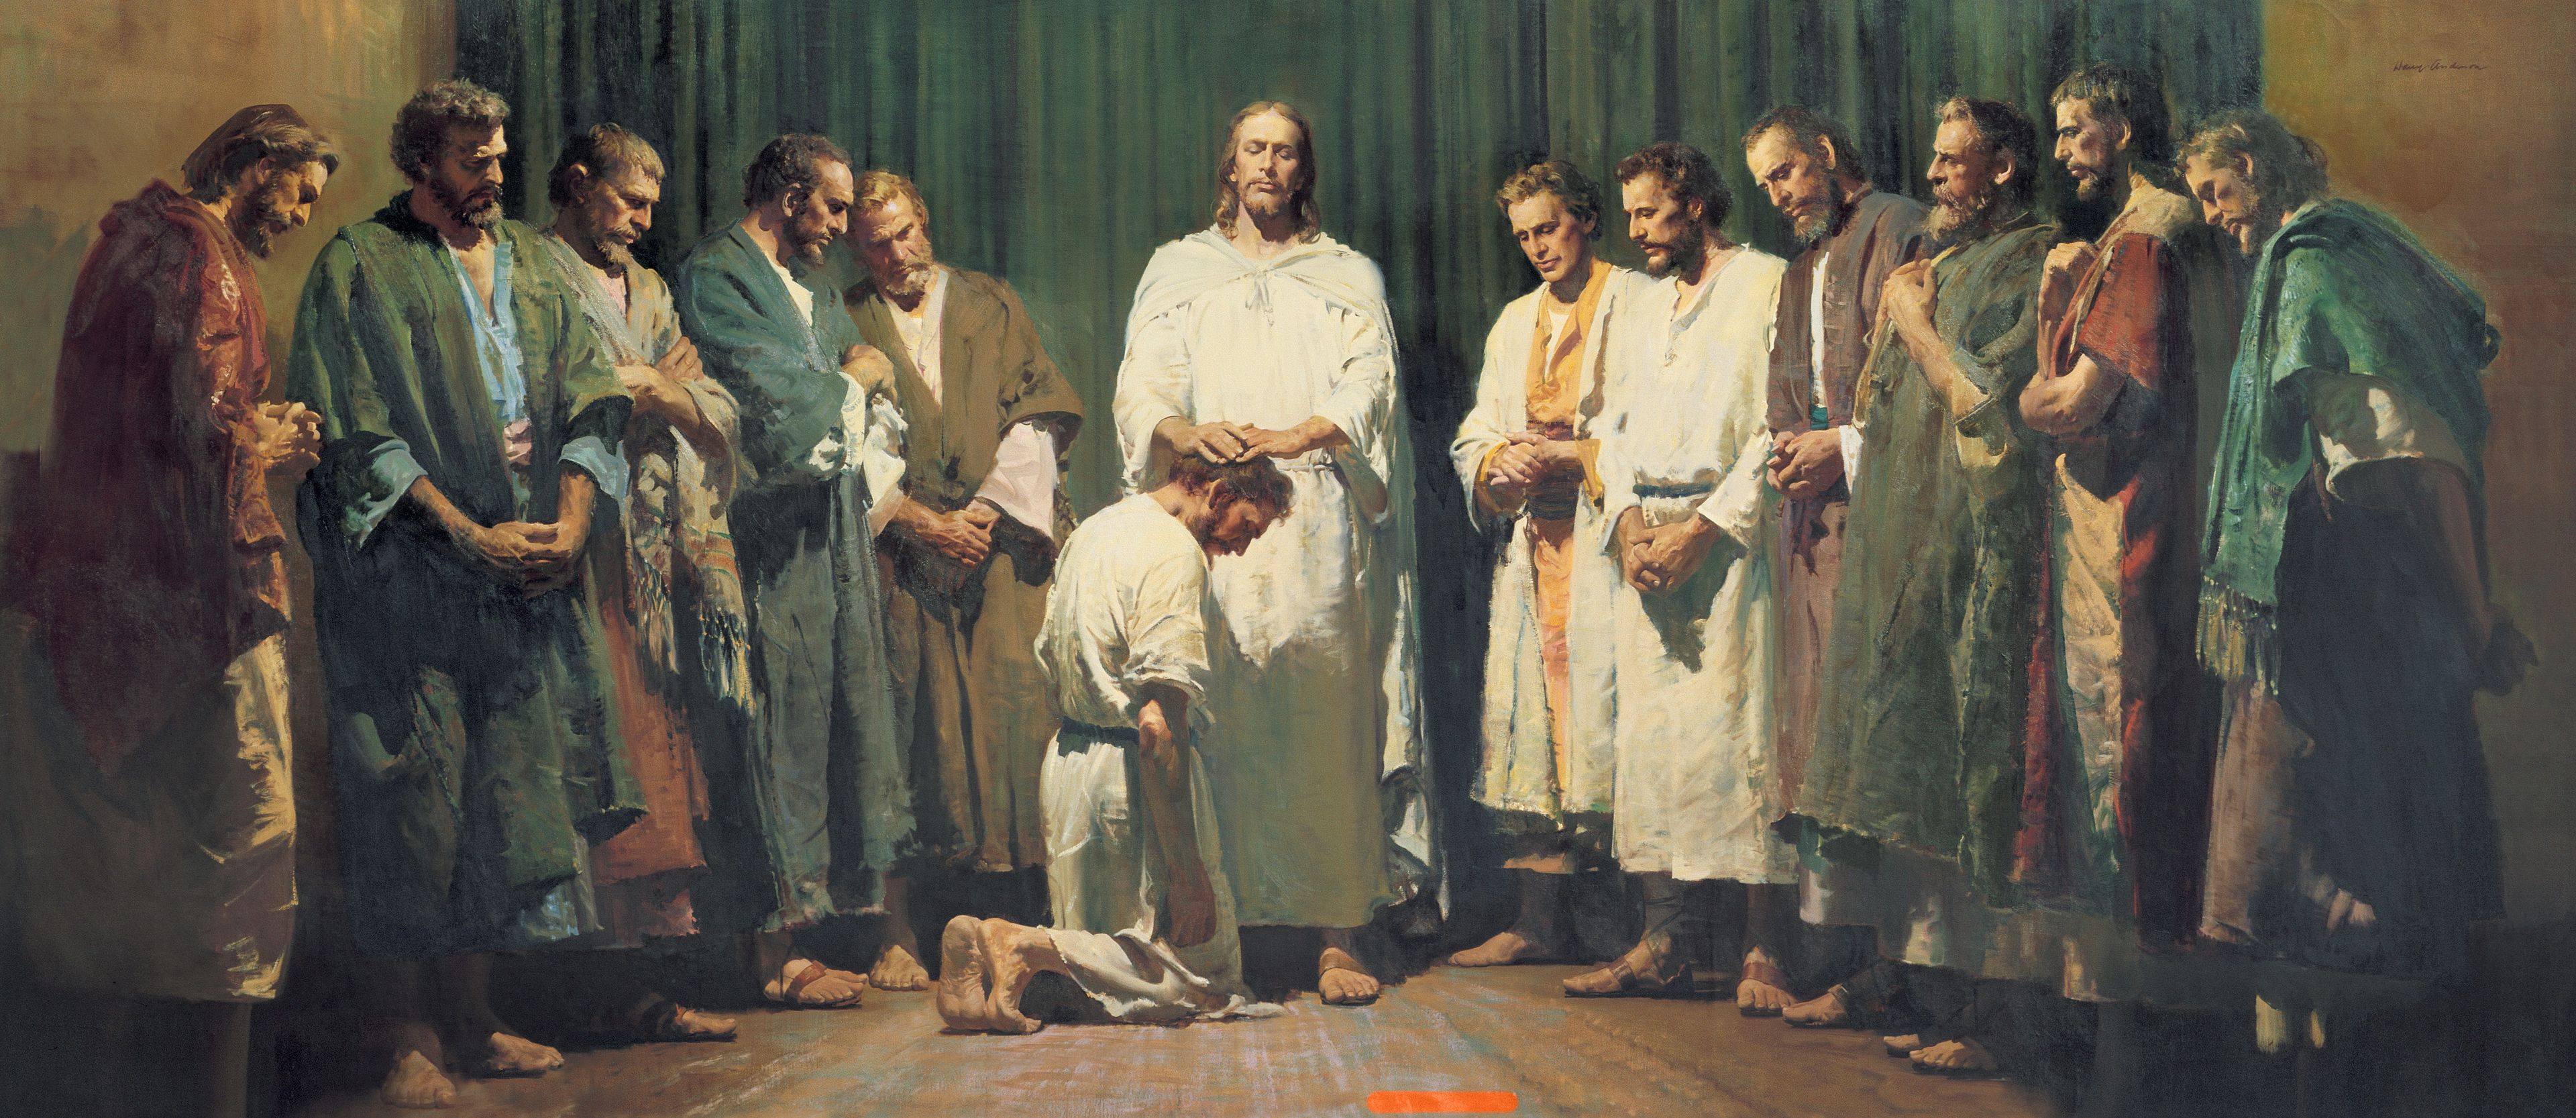 Christus ordent de apostelen (Christus ordent de twaalf apostelen)